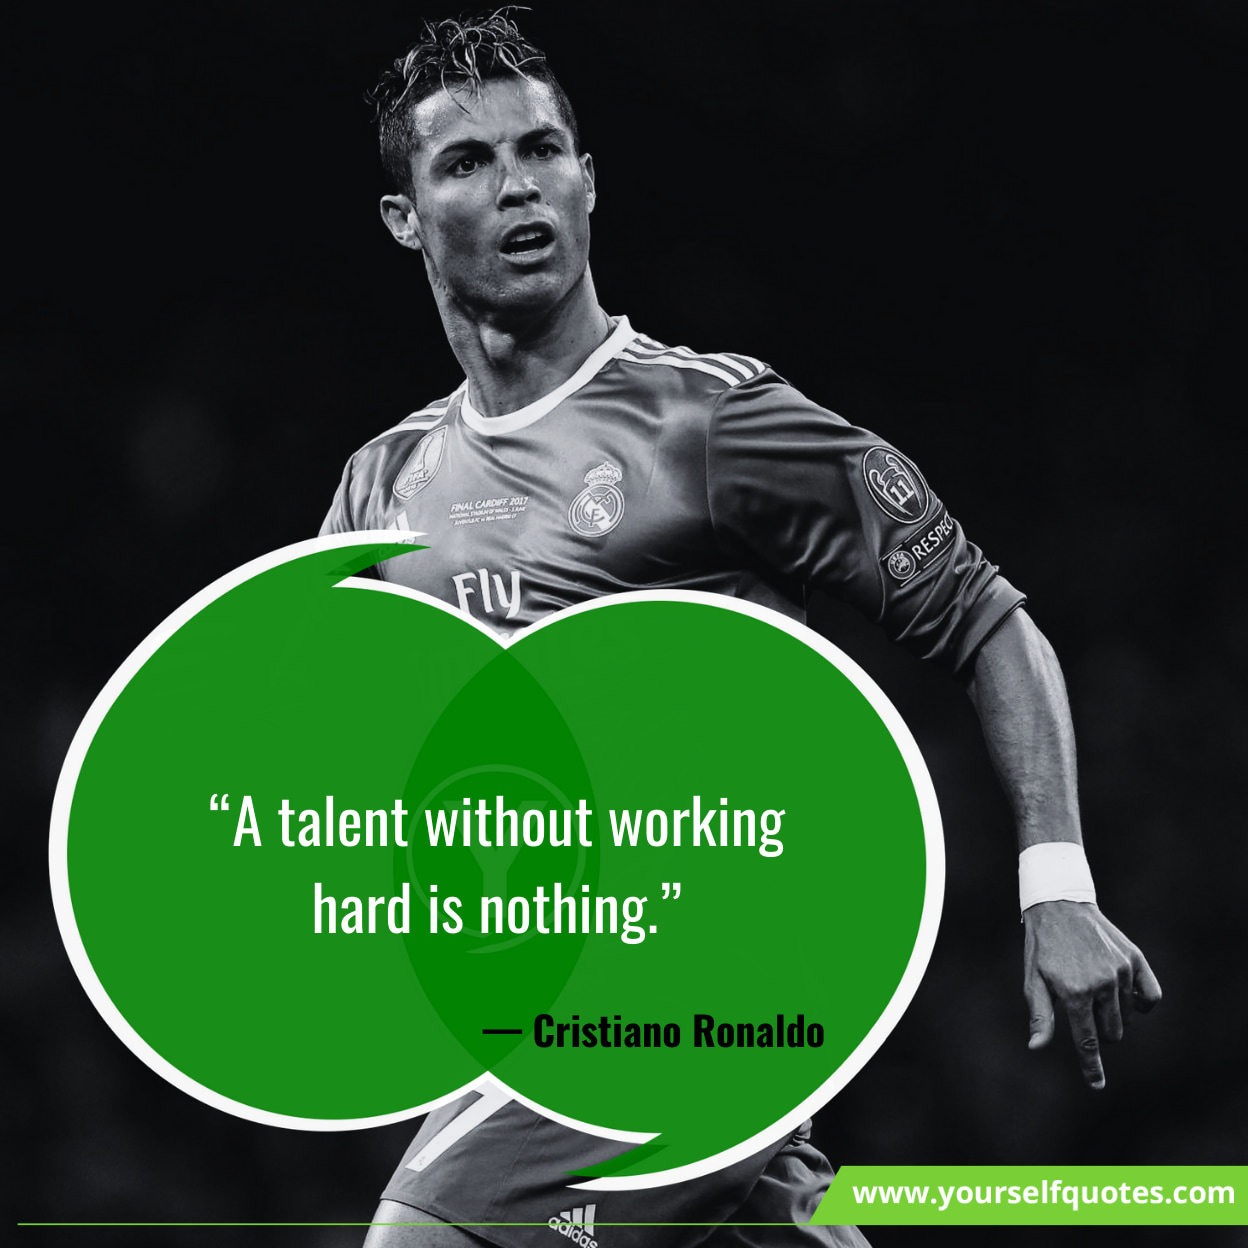 Cristiano Ronaldo Inspiring Quotes